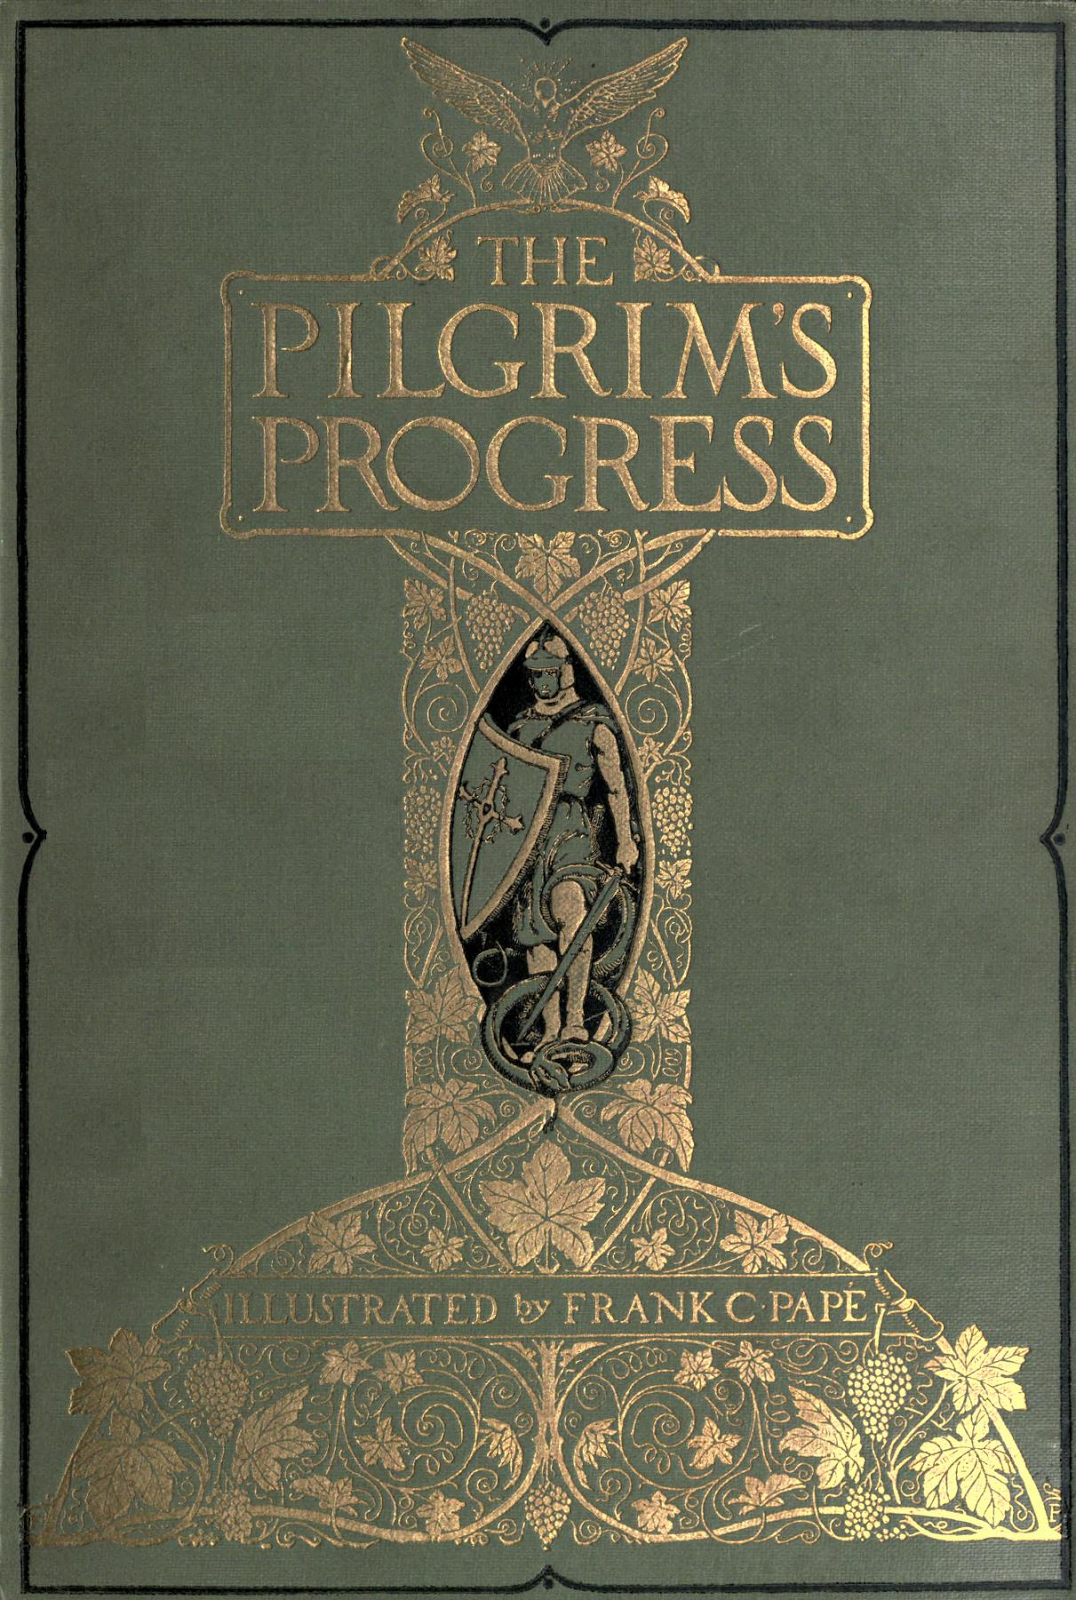 Characters in "The Pilgrim's Progress"